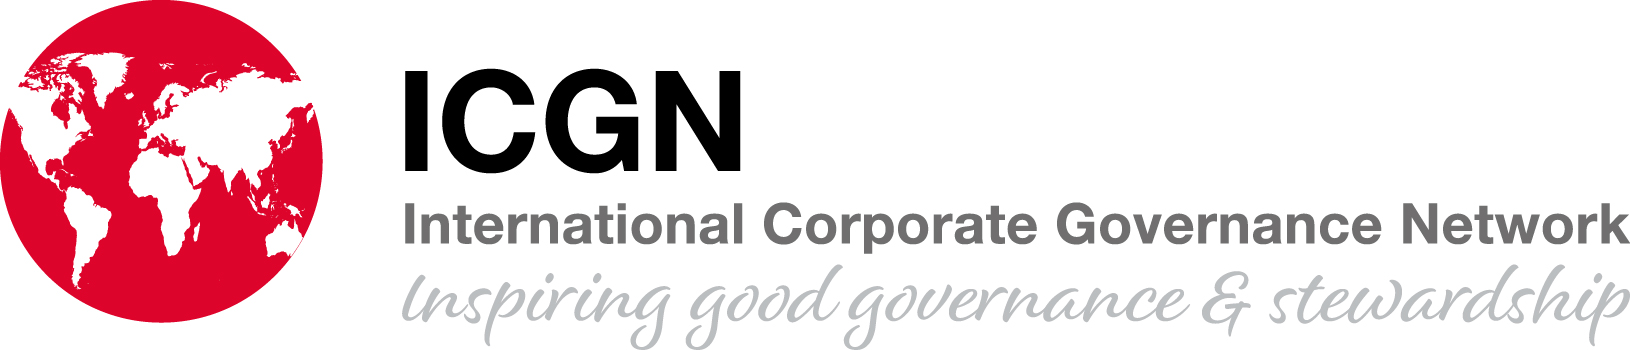 International Corporate Governance Network (ICGN)